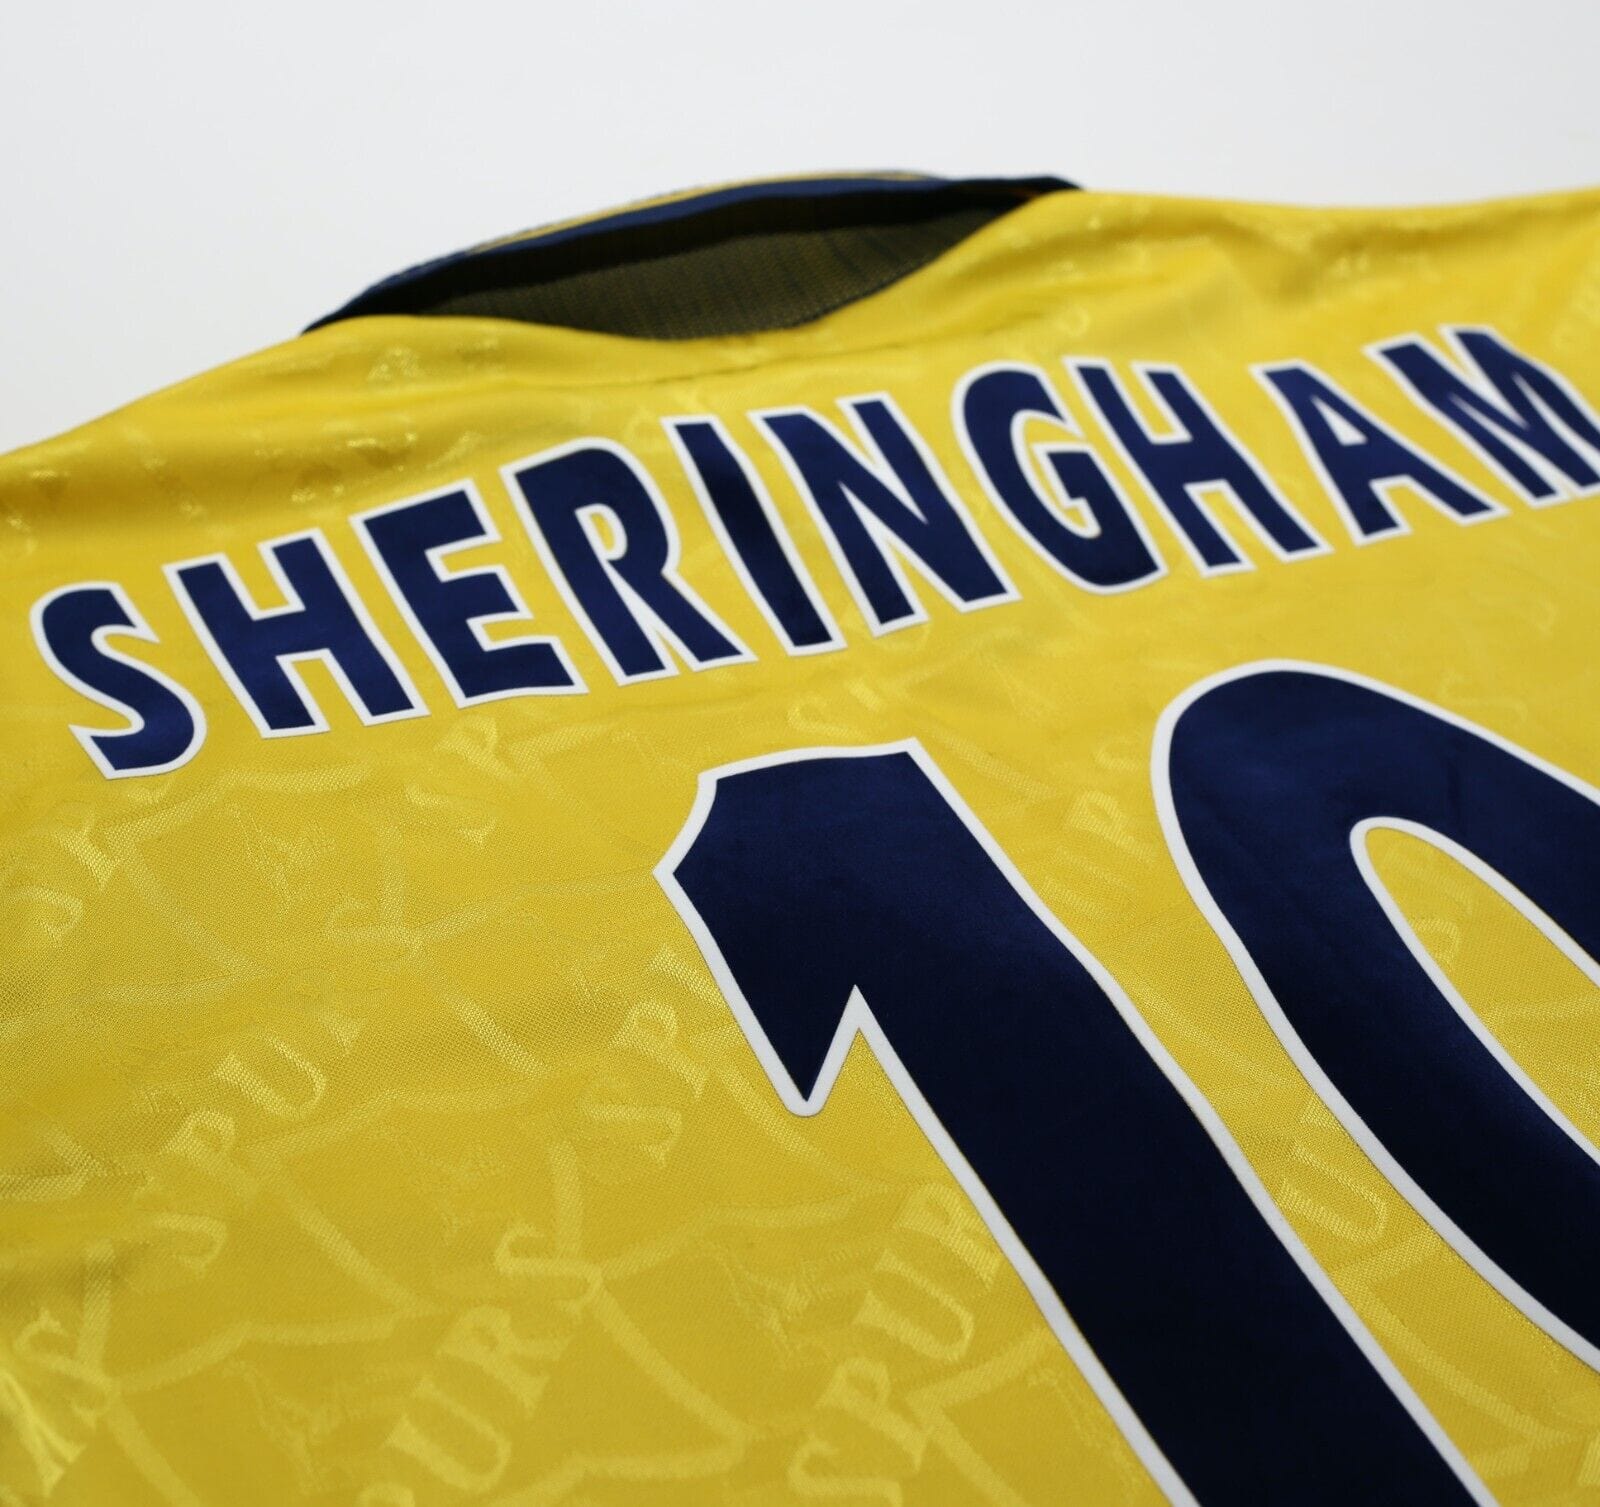 1996/97 SHERINGHAM #10 Tottenham Hotspur Vintage PONY Away Football Shirt (M)